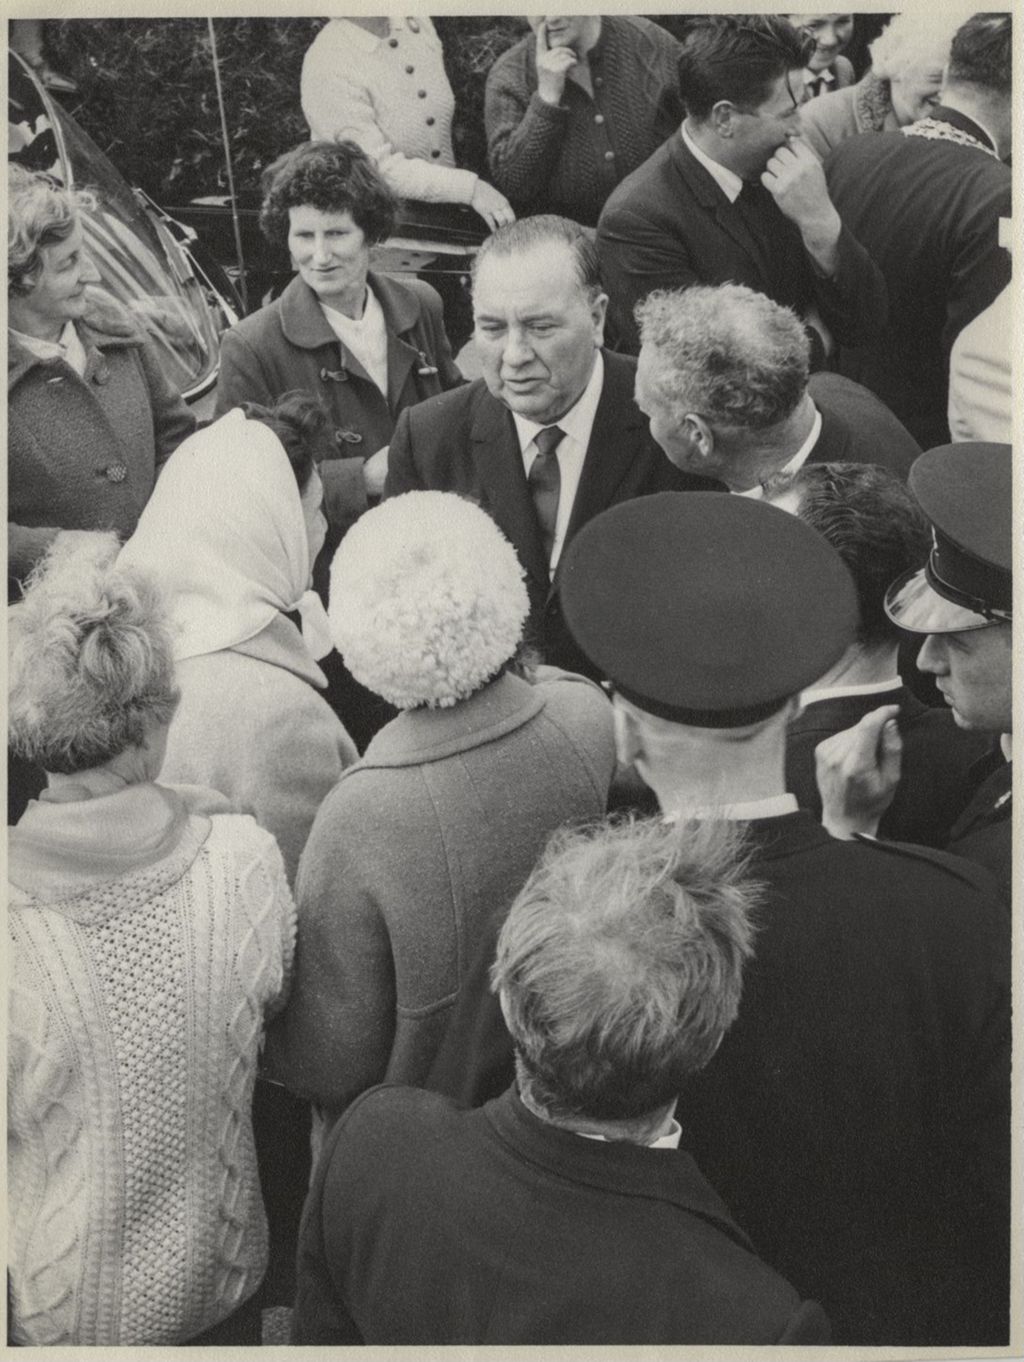 Trip to Ireland, Richard J. Daley in a crowd